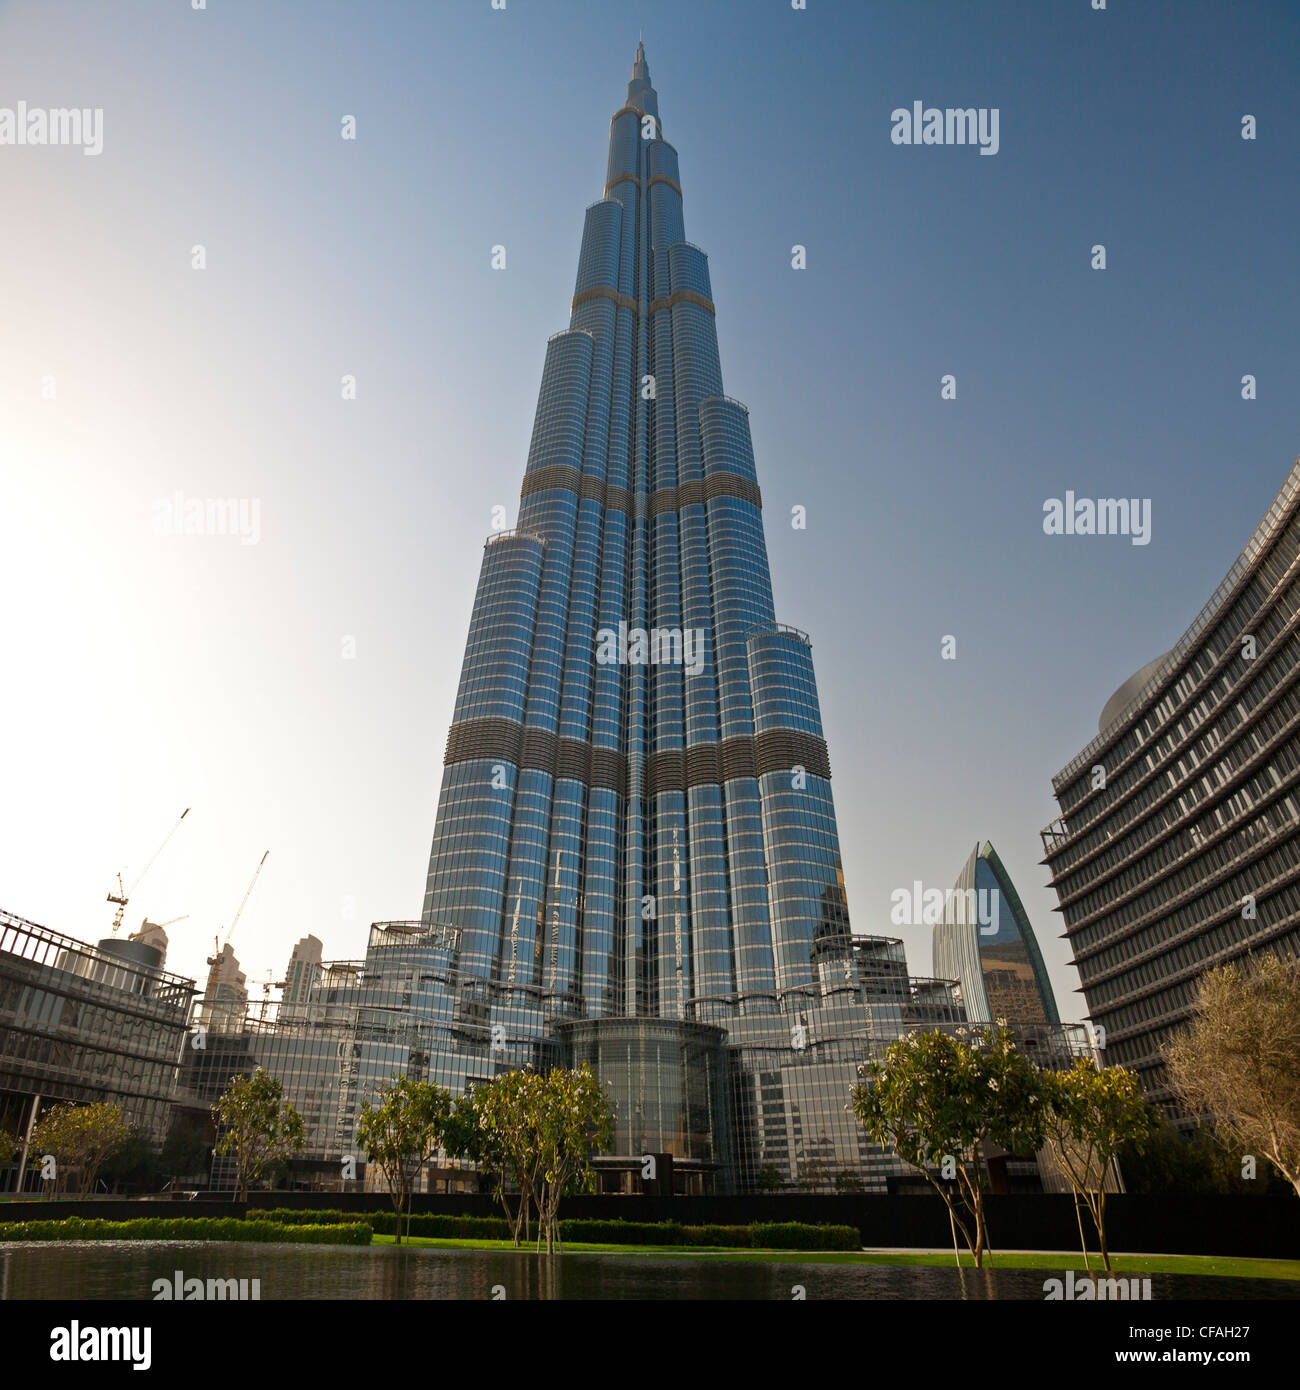 A low-angle shot of the Burj Khalifa tower seen from the vantage point of the Burj Khalifa Park (Dubai - United Arab Emirates). Stock Photo